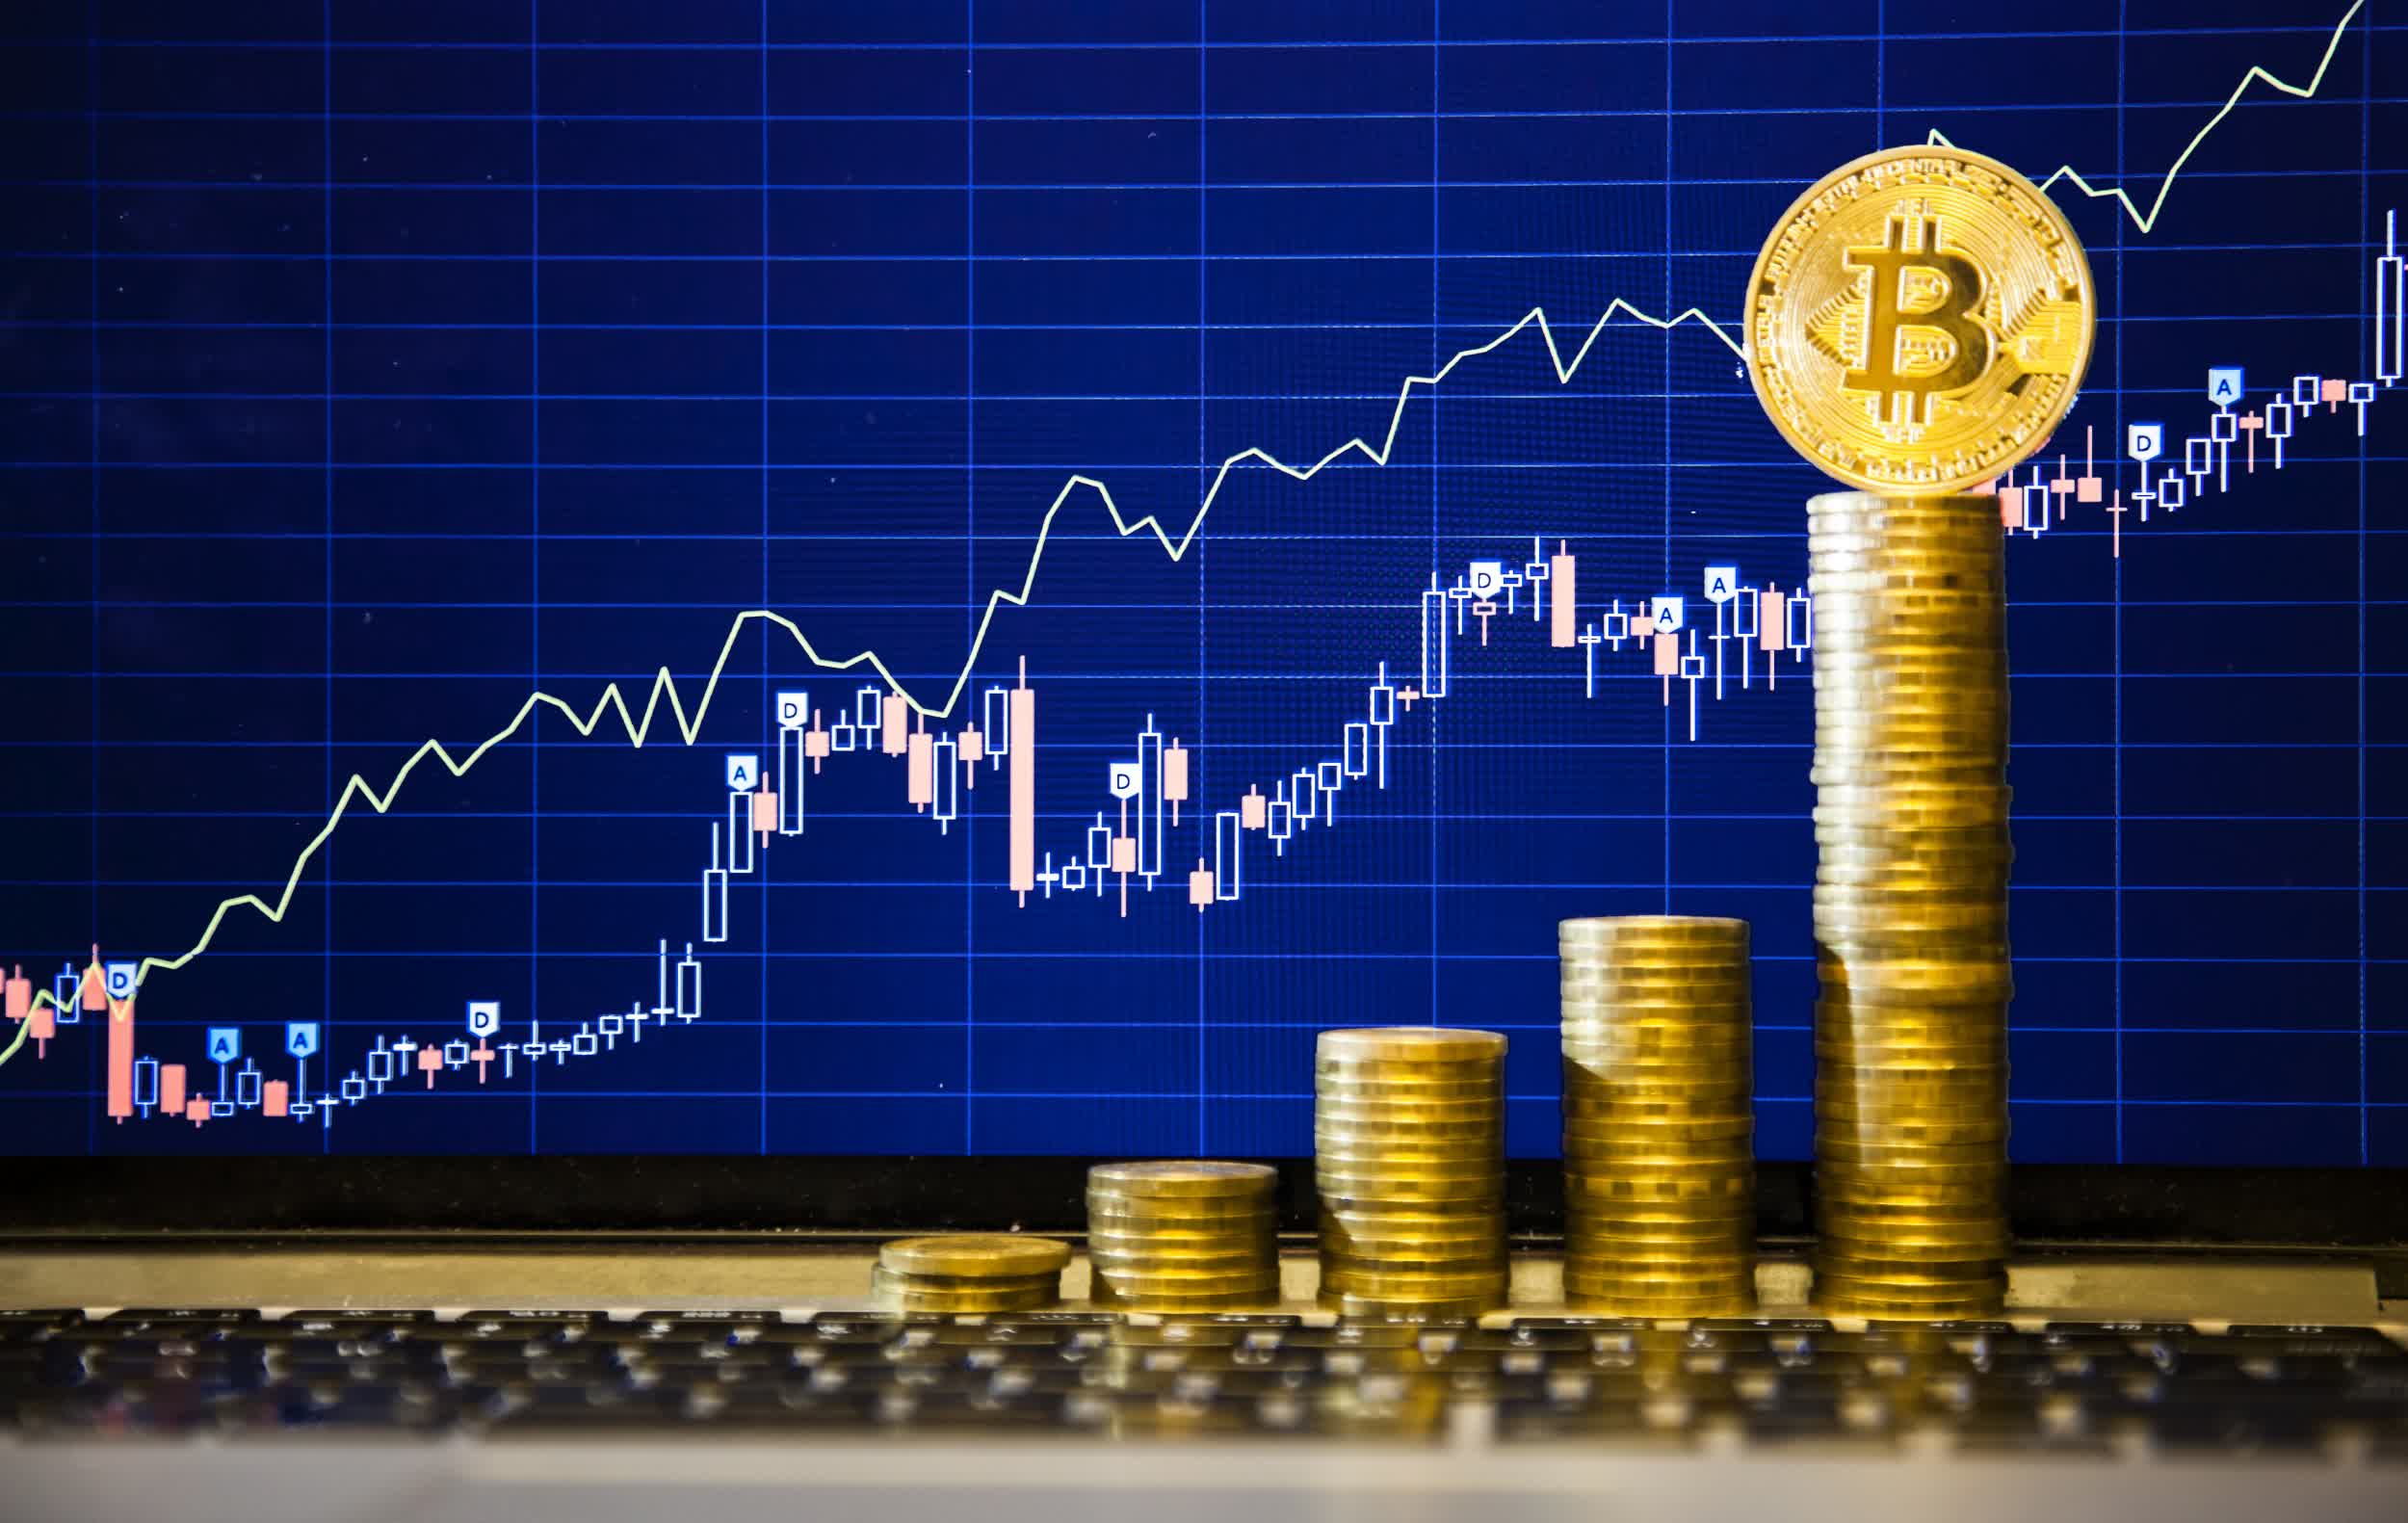 Bitcoin hits highest price since August, despite regulator clampdown